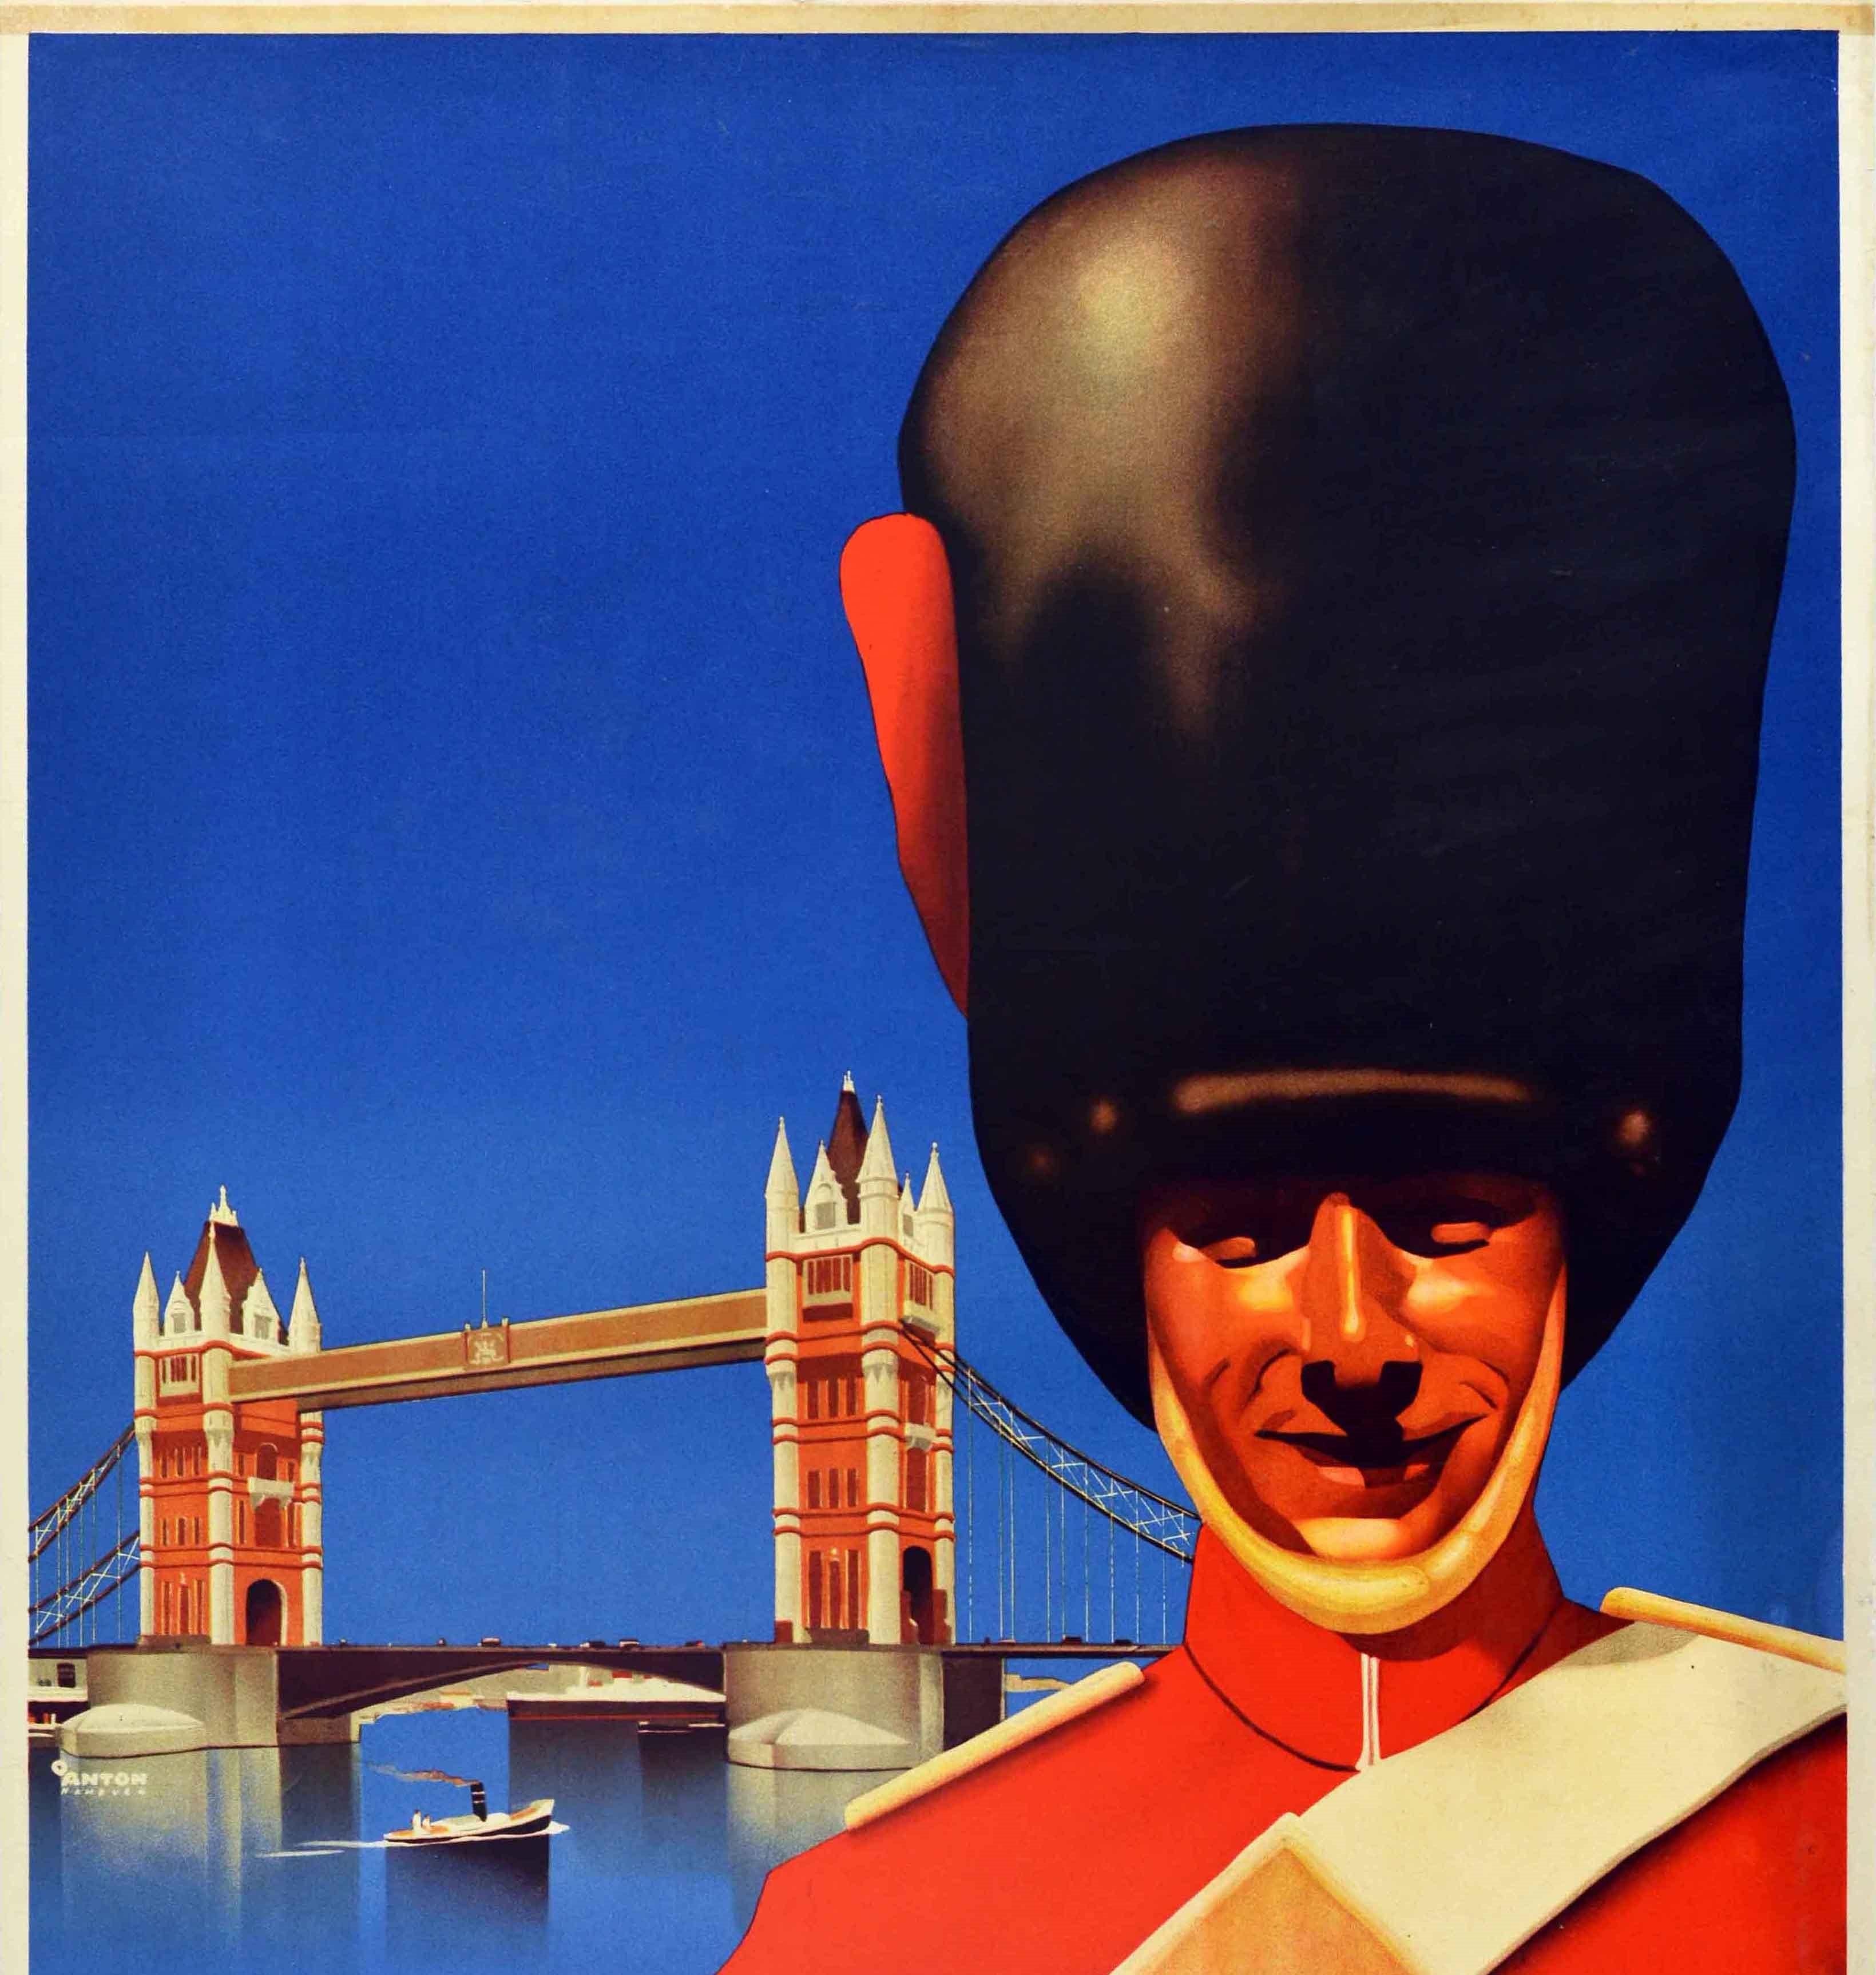 Paper Original Vintage Travel Poster London Cruise Ft. Royal Guard Tower Bridge Design For Sale